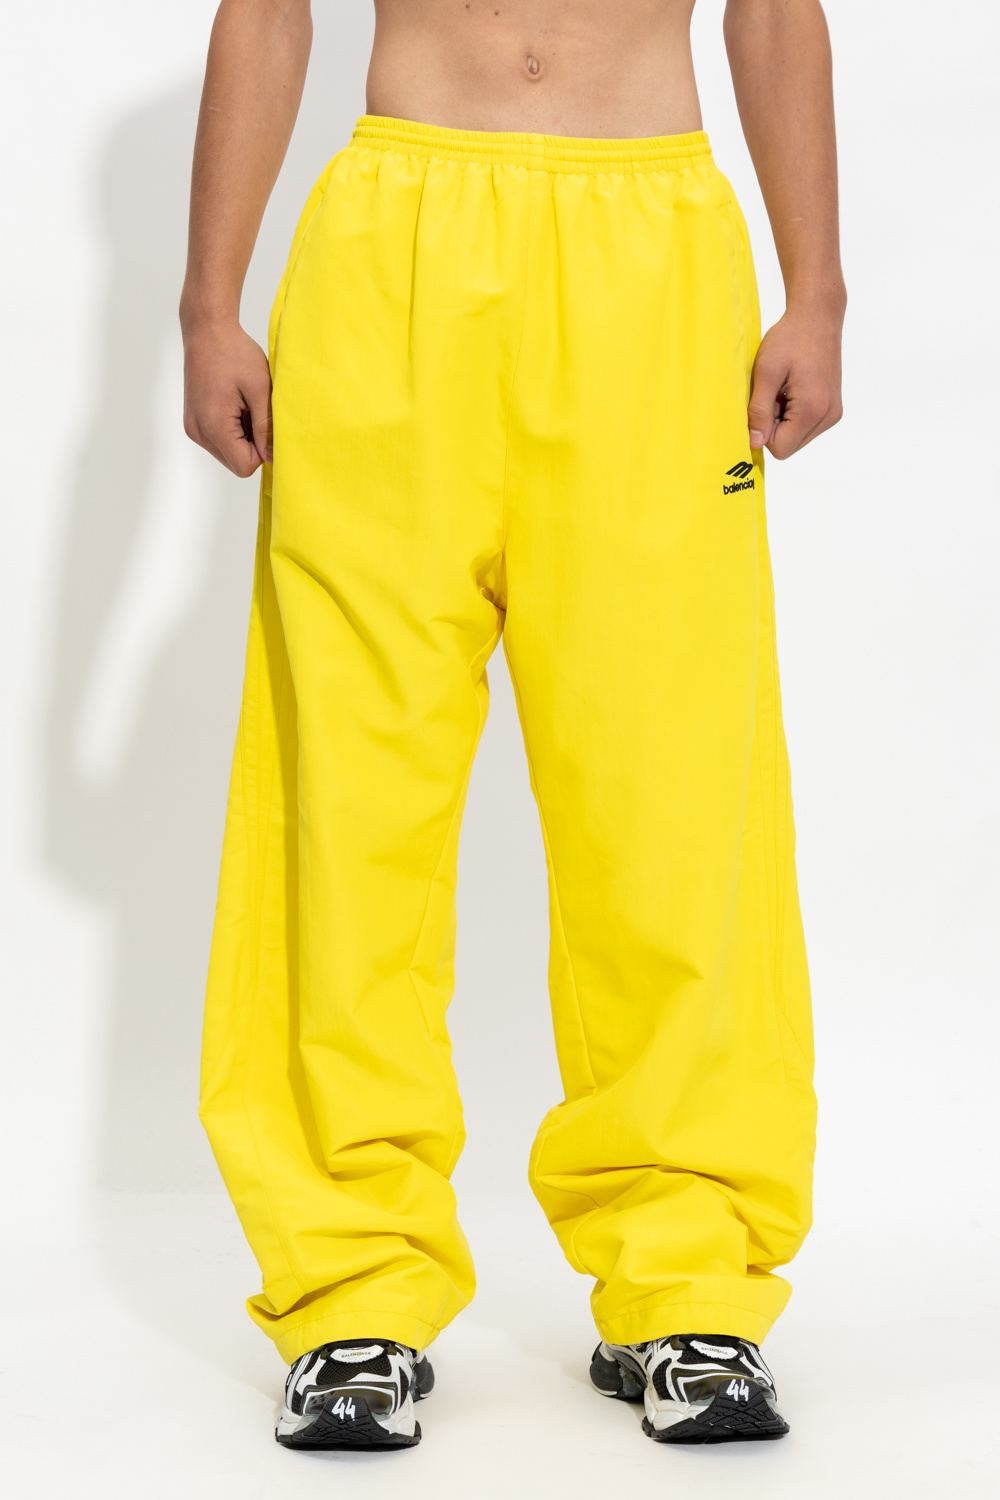 Yellow Track pants with logo Balenciaga - Pas Normal Studios 